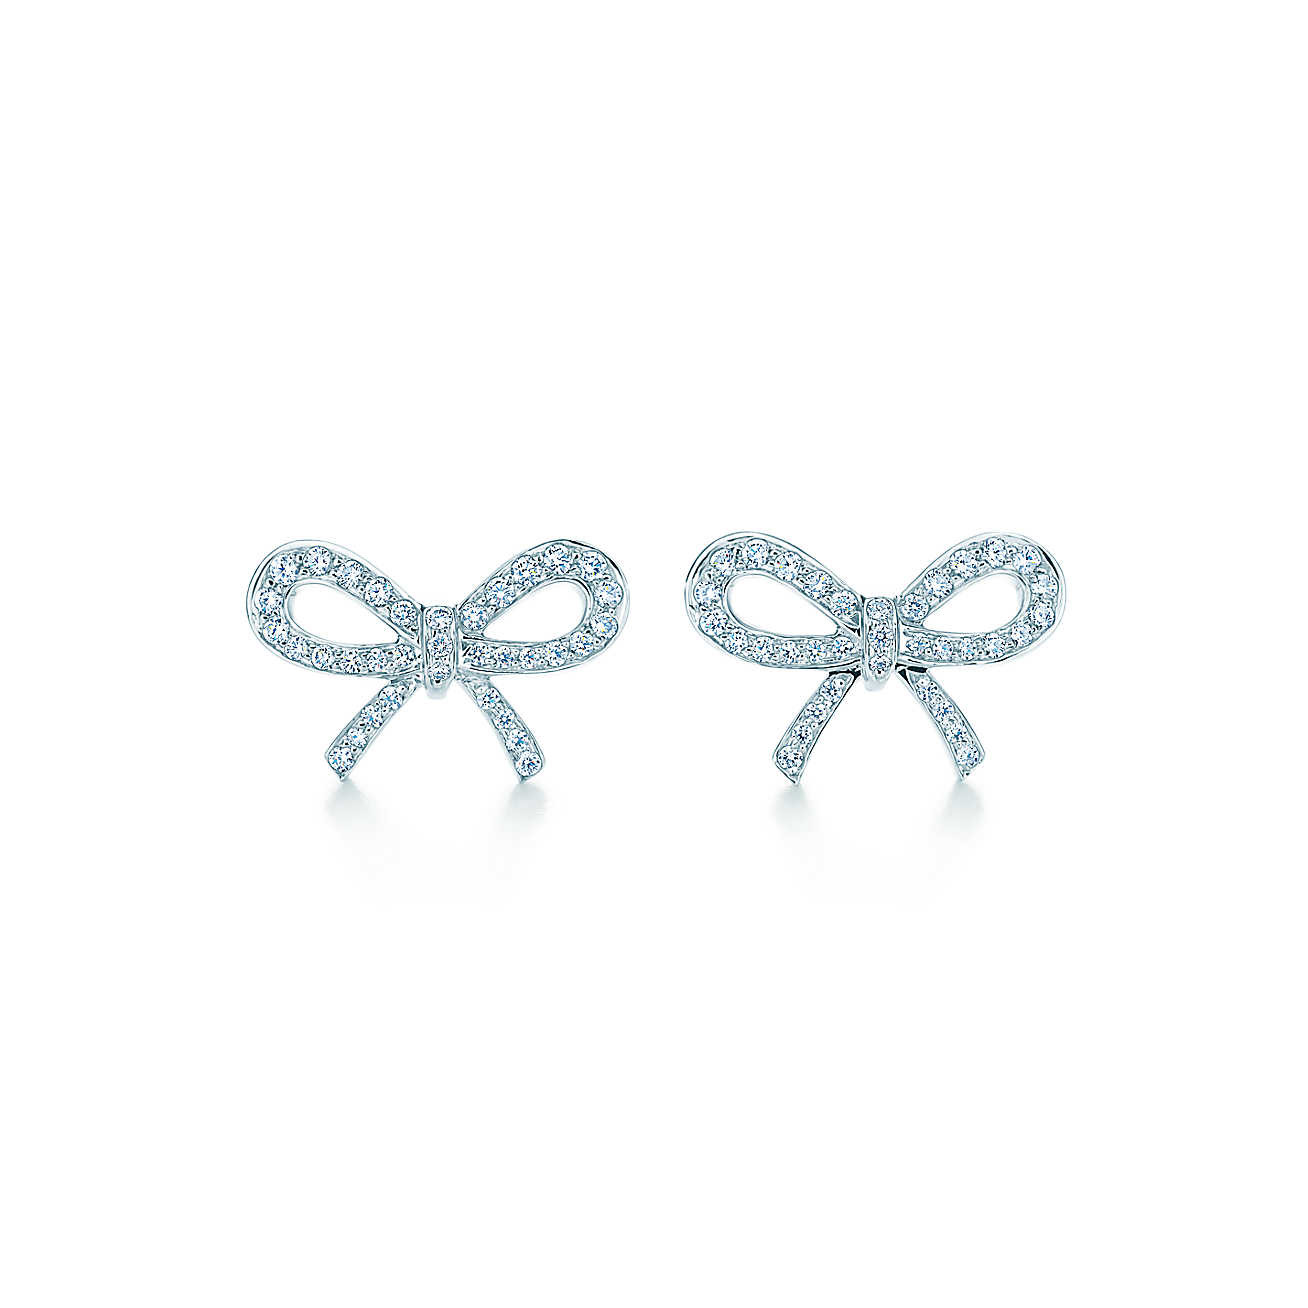 Tiffany Bow Earrings
 Tiffany Bow earrings in platinum with diamonds